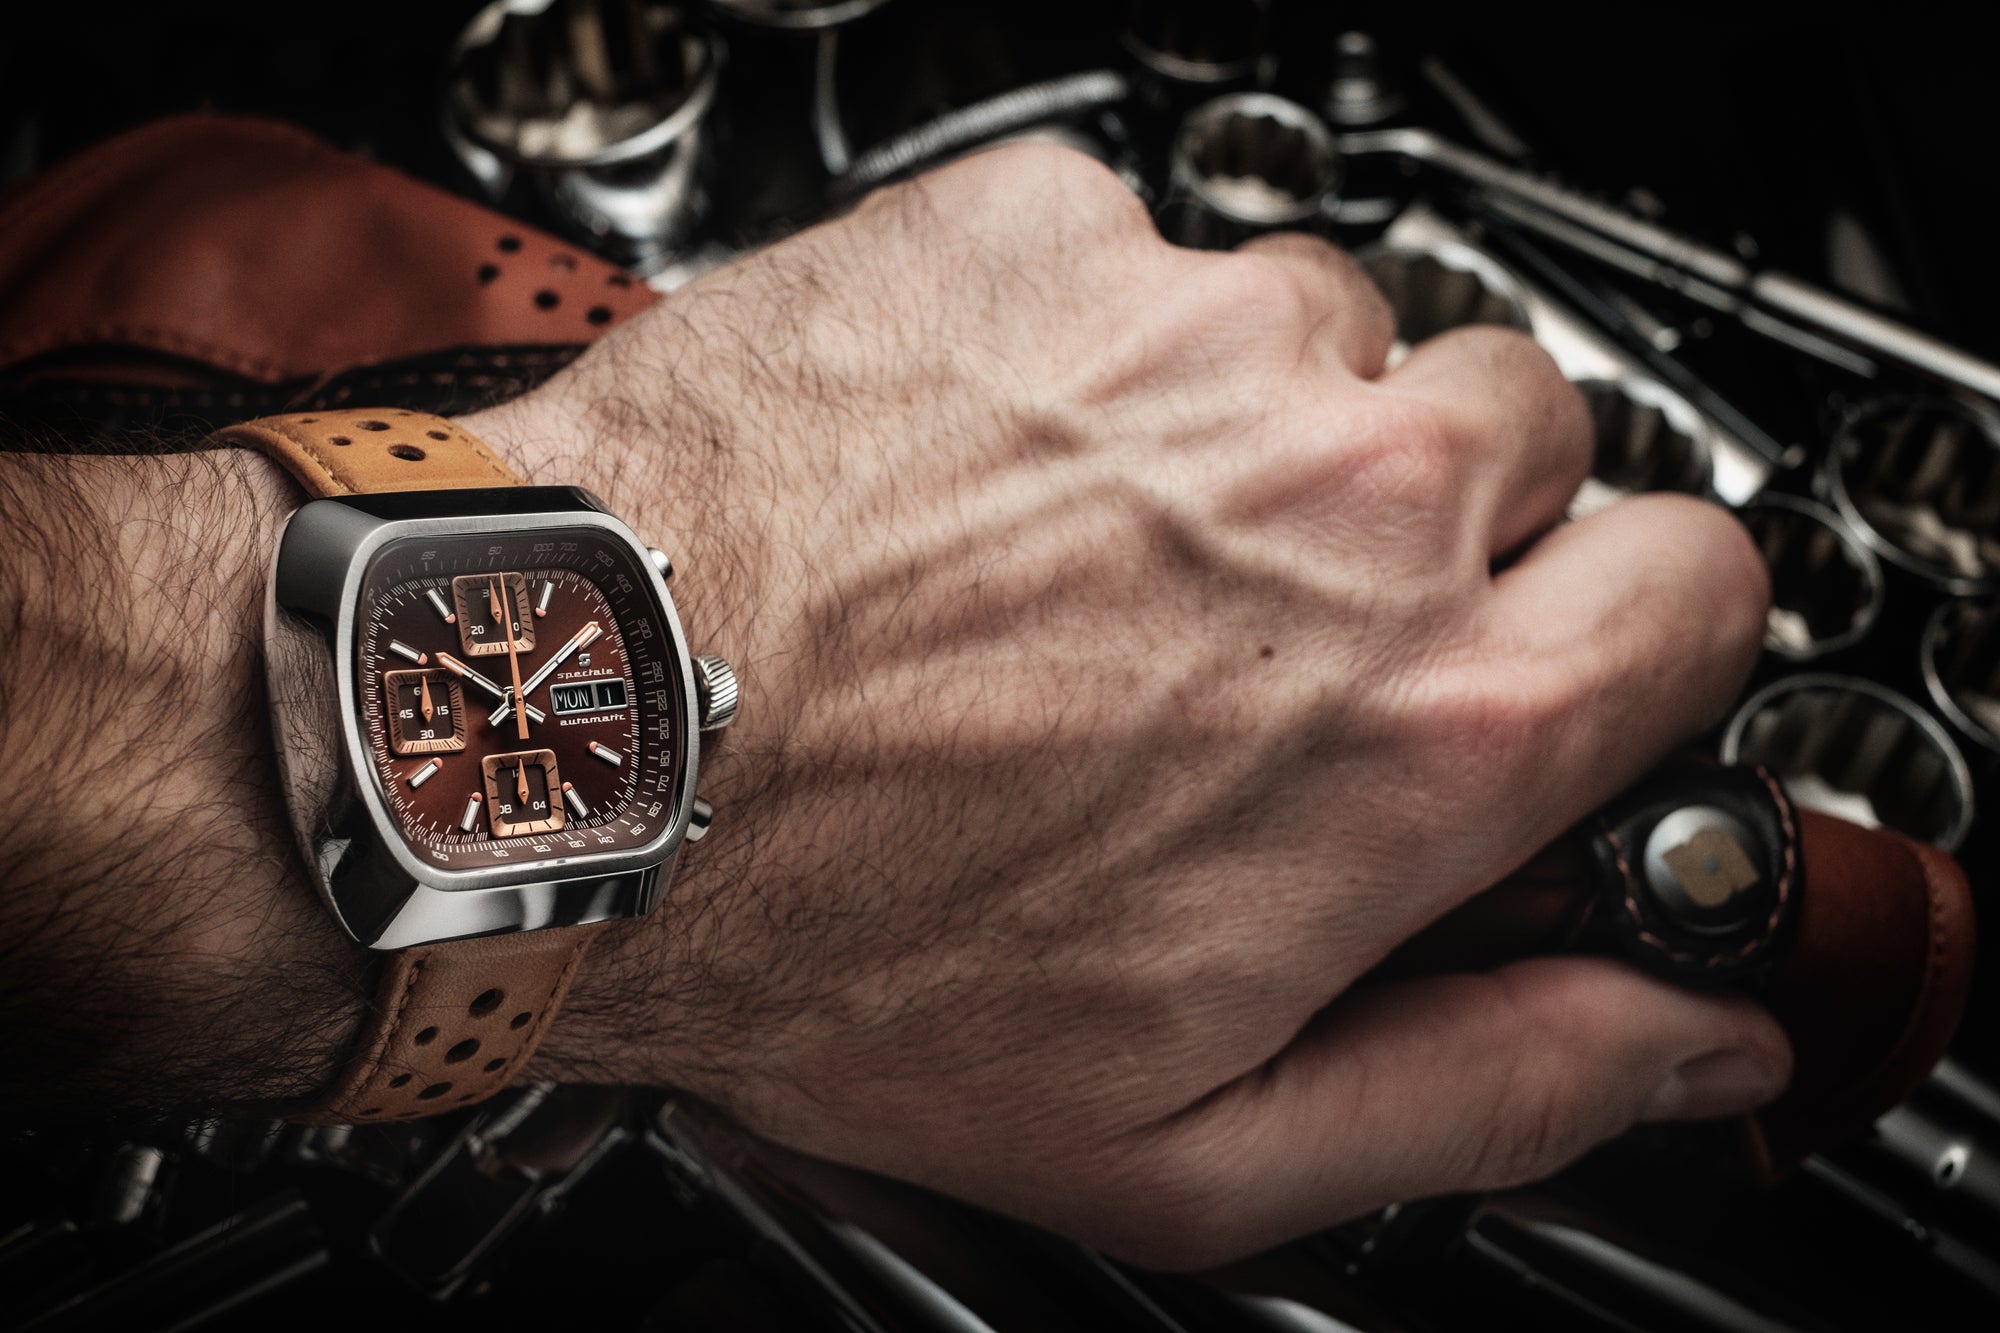 Racing chronograph watch